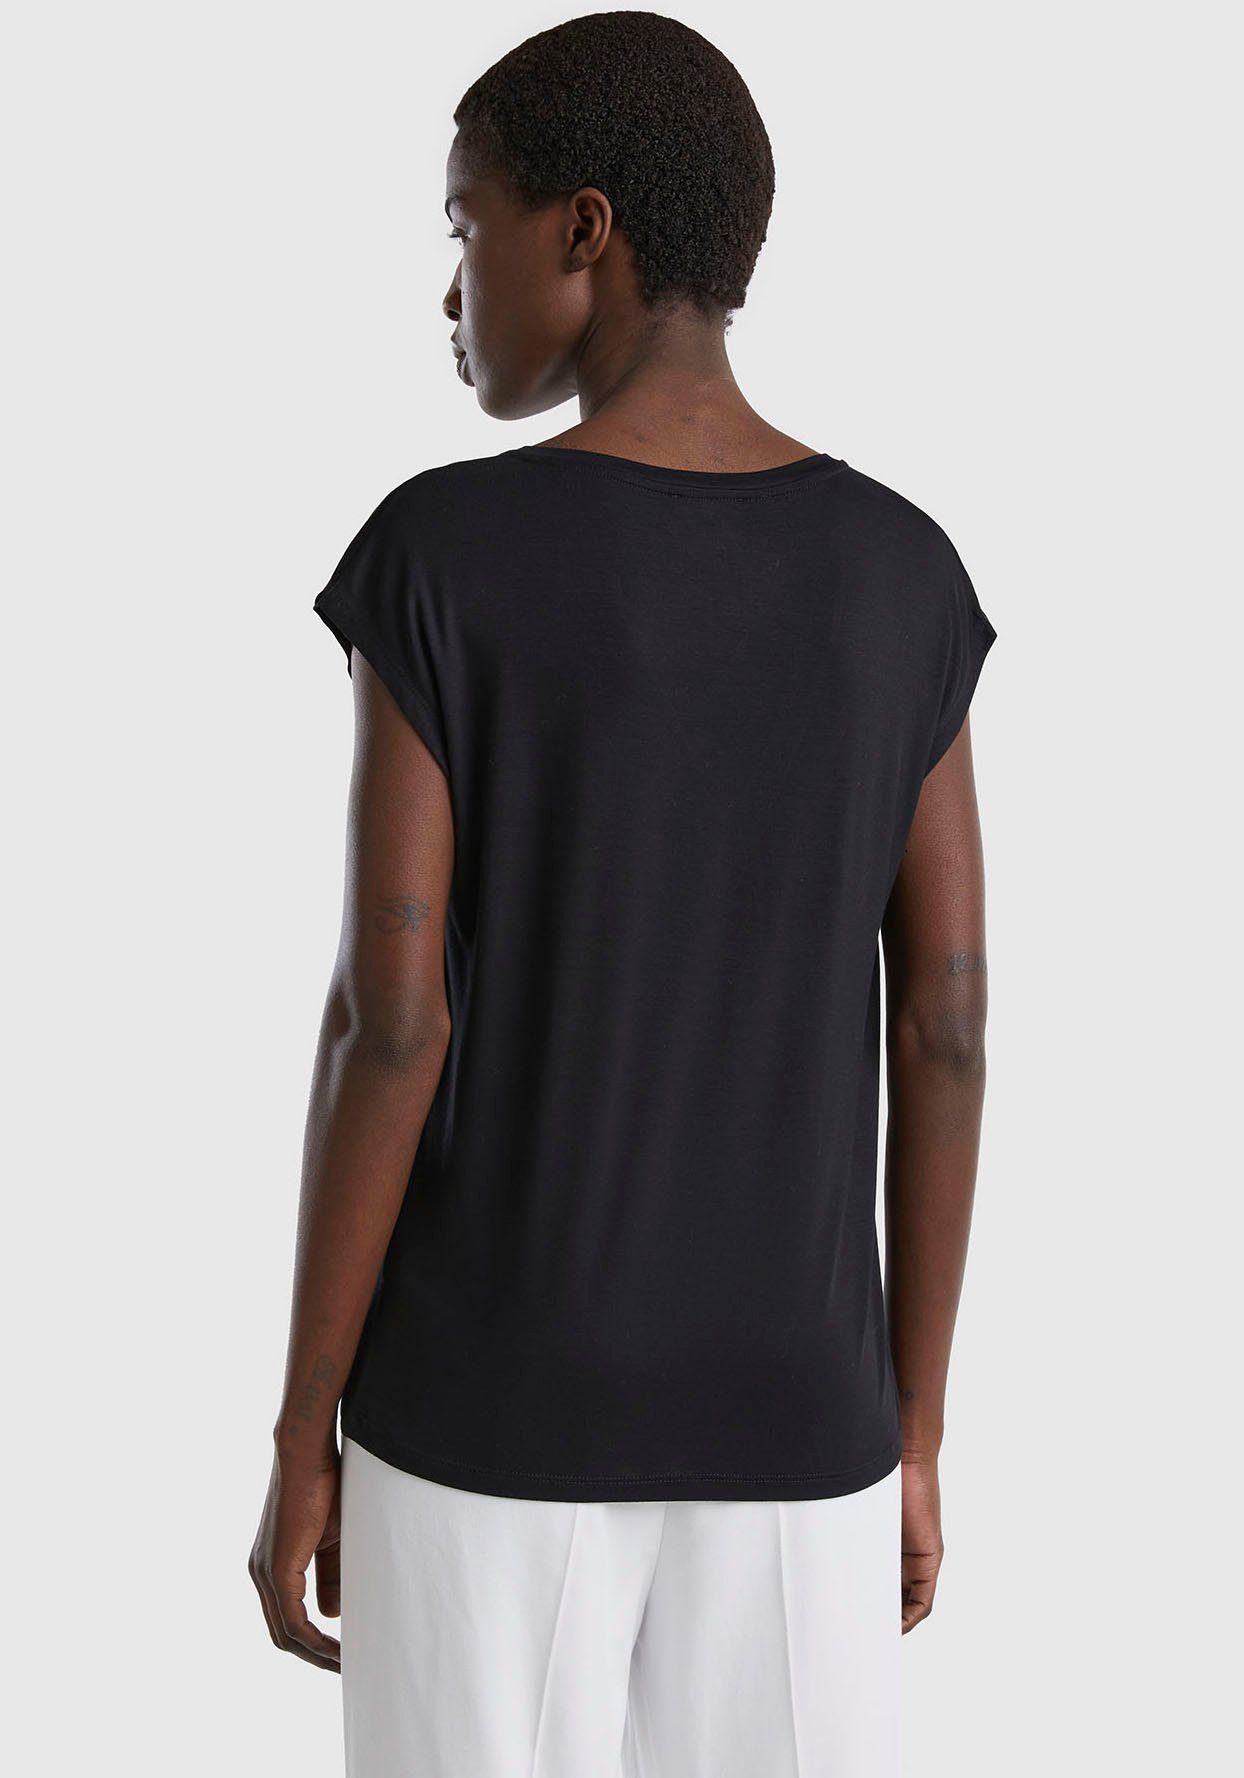 T-SHIRT Passform Colors in United Benetton of V-Shirt lässiger schwarz